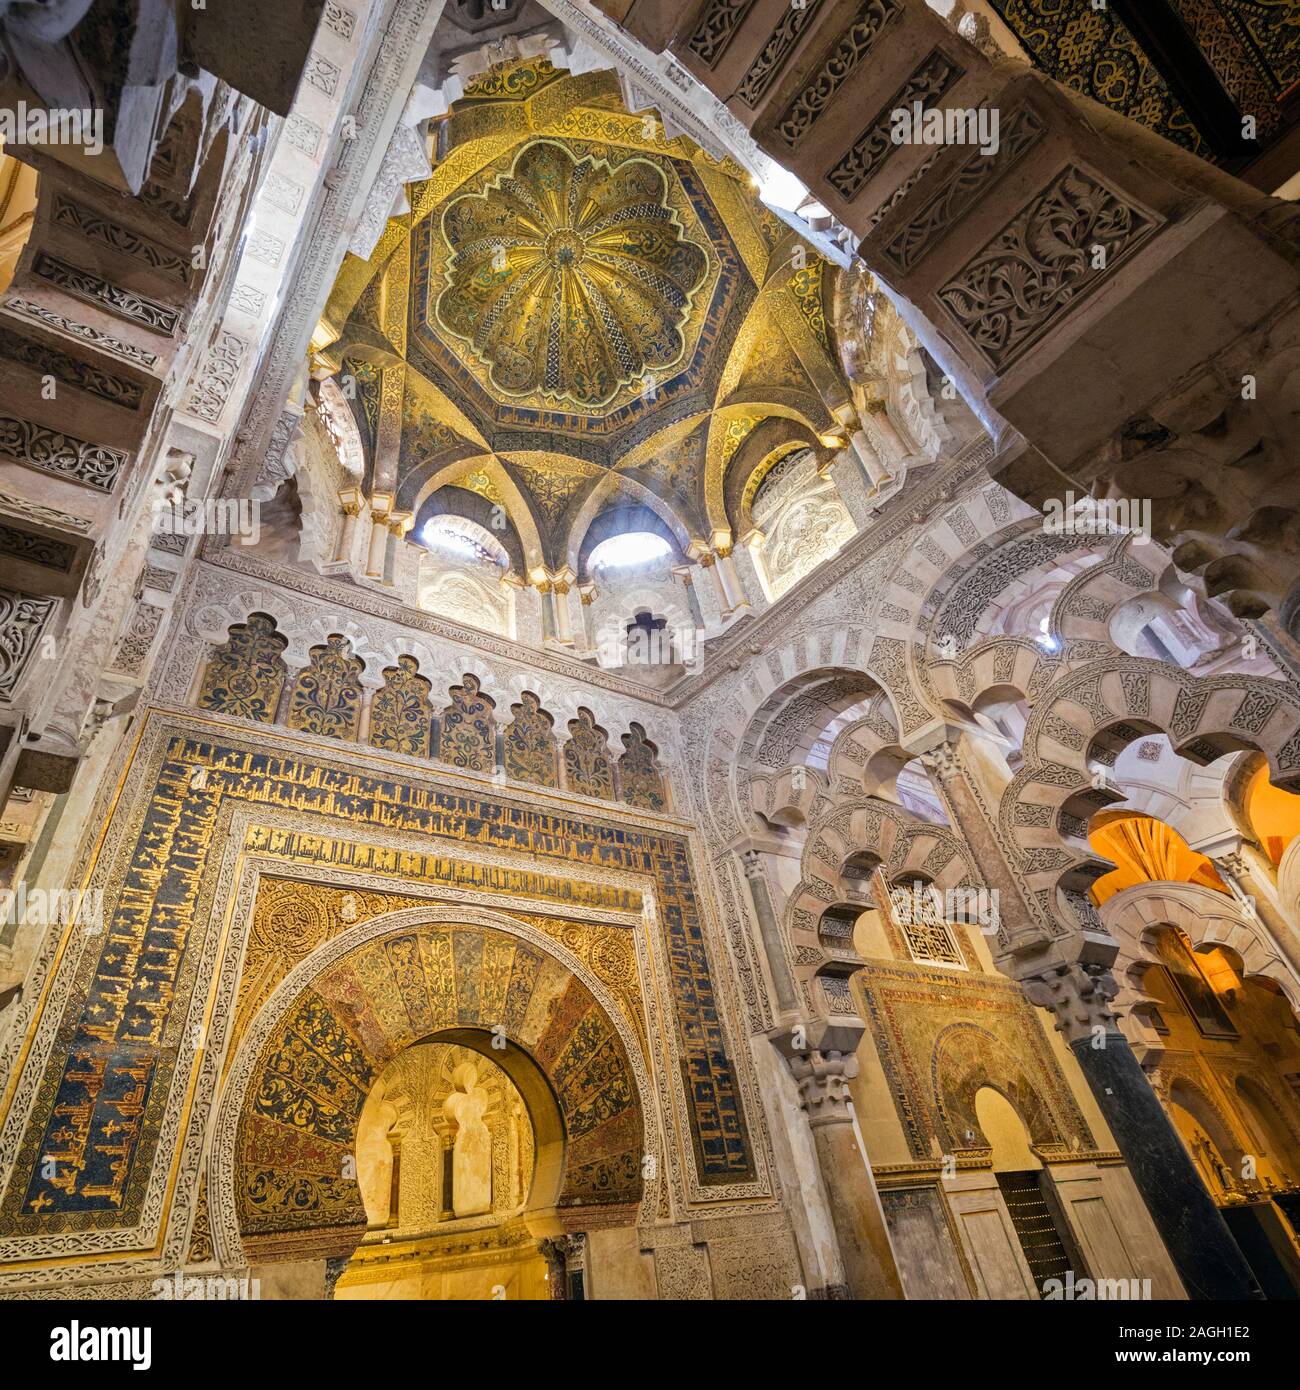 Cordoba, Cordoba Province, Andalusia, southern Spain.   Interior of the Mosque.  La Mezquita.  Dome of the mihrab.  The historic centre of Cordoba is Stock Photo